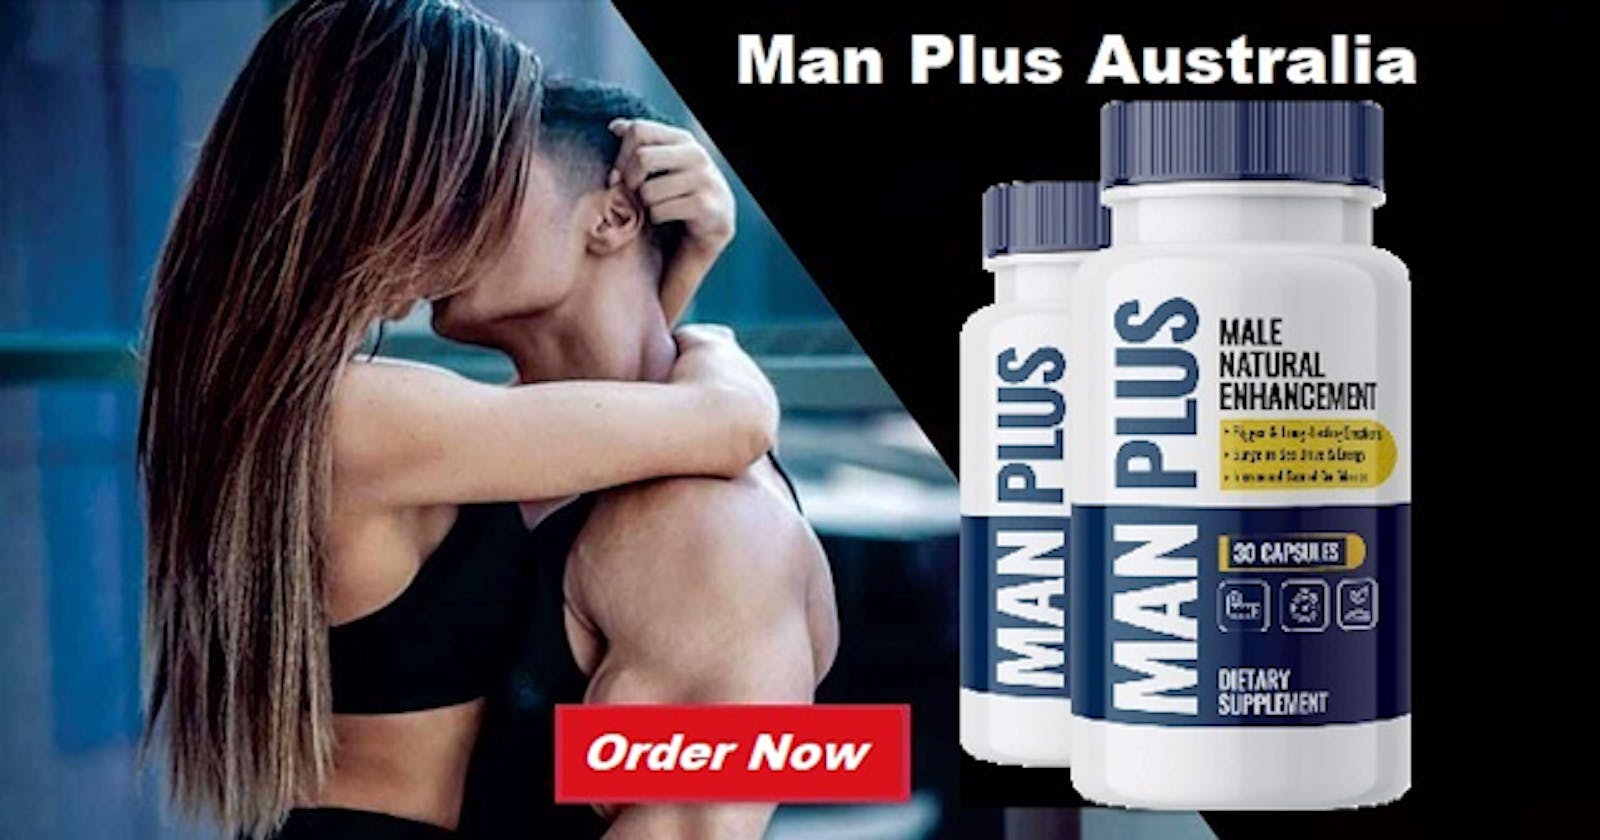 Manplus ⚠️BEWARE⚠️ Manplus  Pill It Works? | Manplus  Male Enhancement Reviews